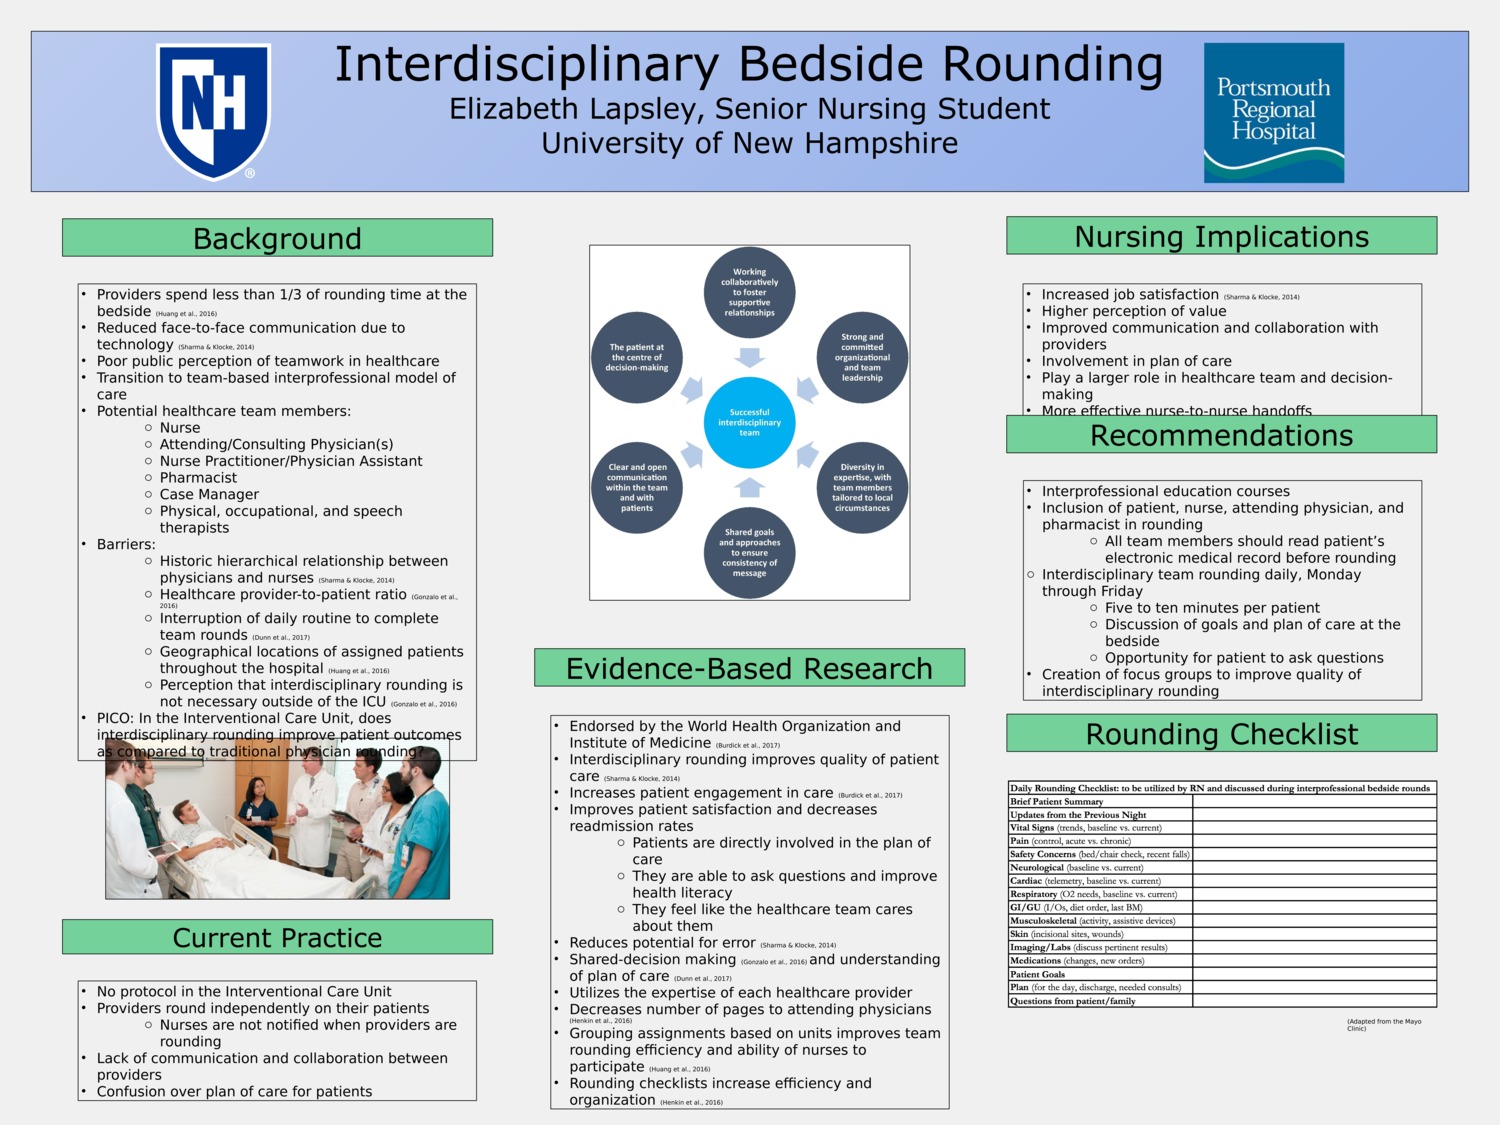 Interdisciplinary Bedside Rounding by ehl2002